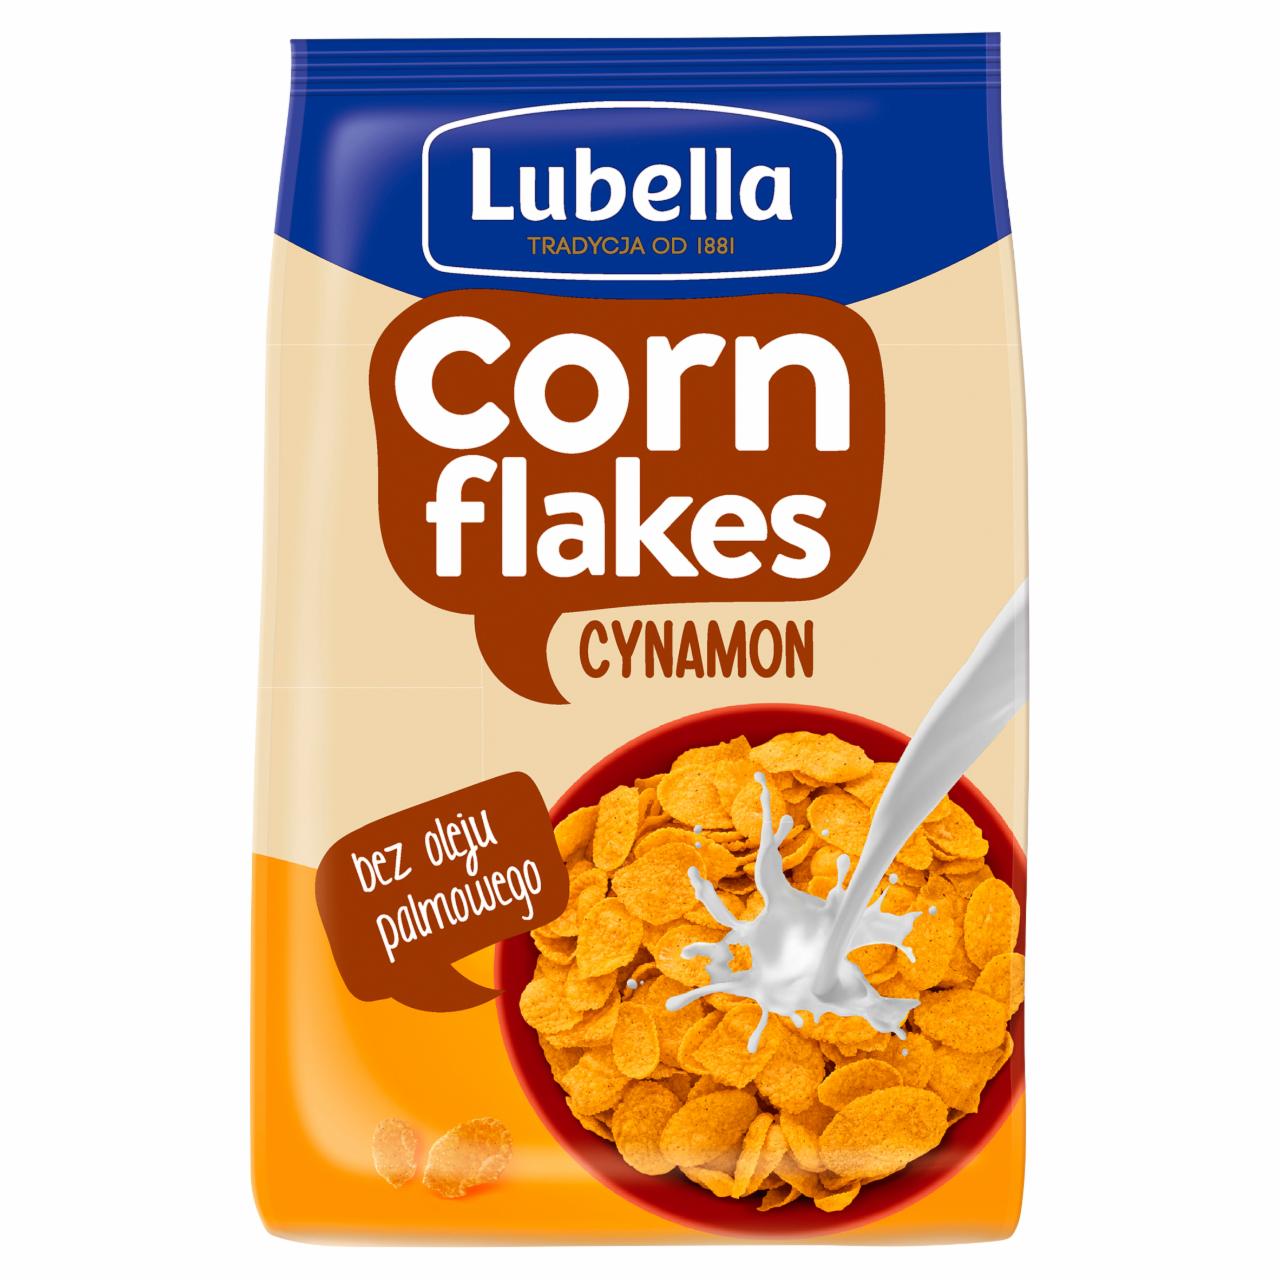 Zdjęcia - Lubella Corn Flakes Płatki kukurydziane cynamon 400 g